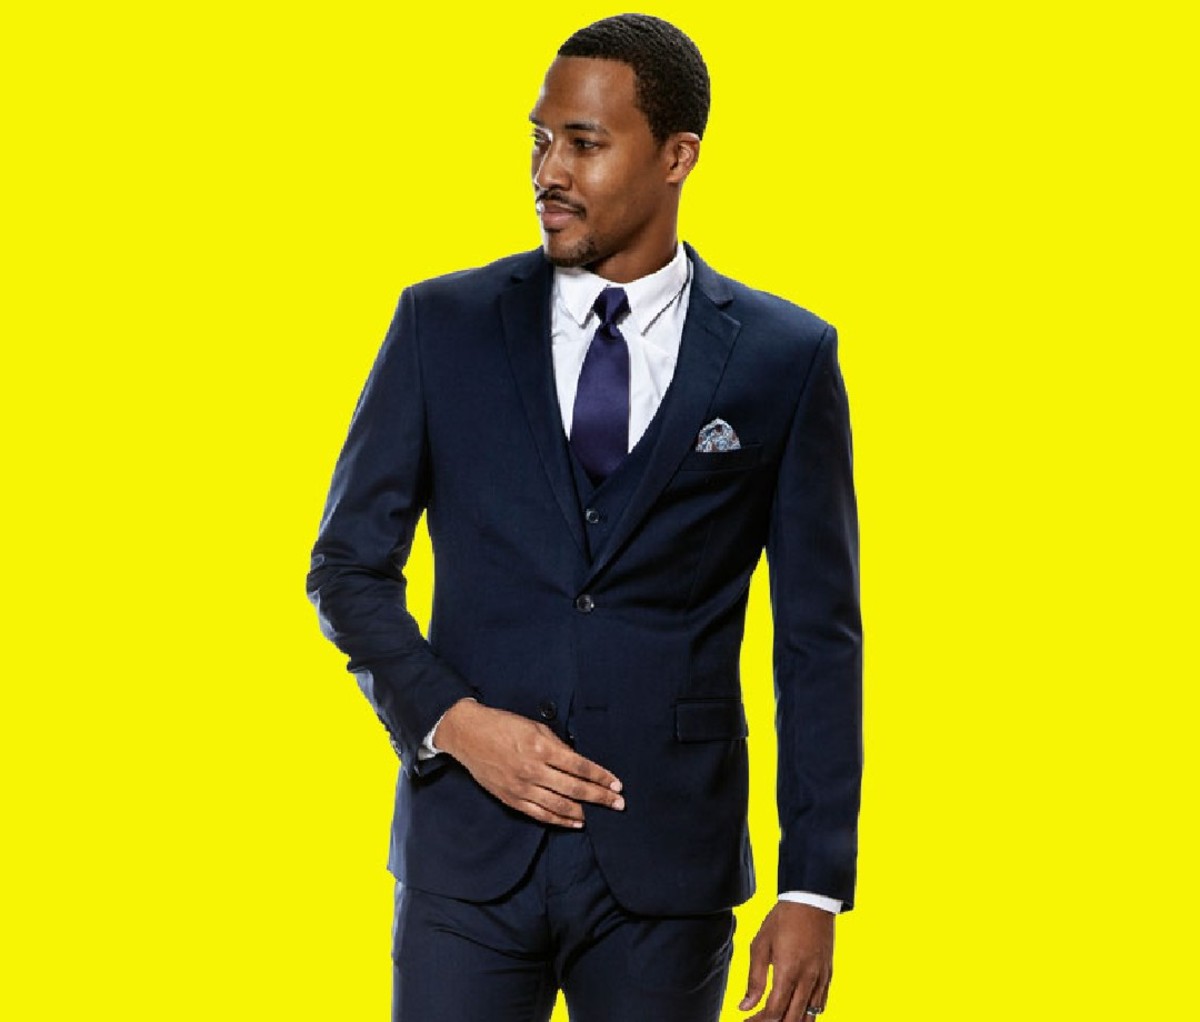 Black man wearing a tuxedo on bright yellow background